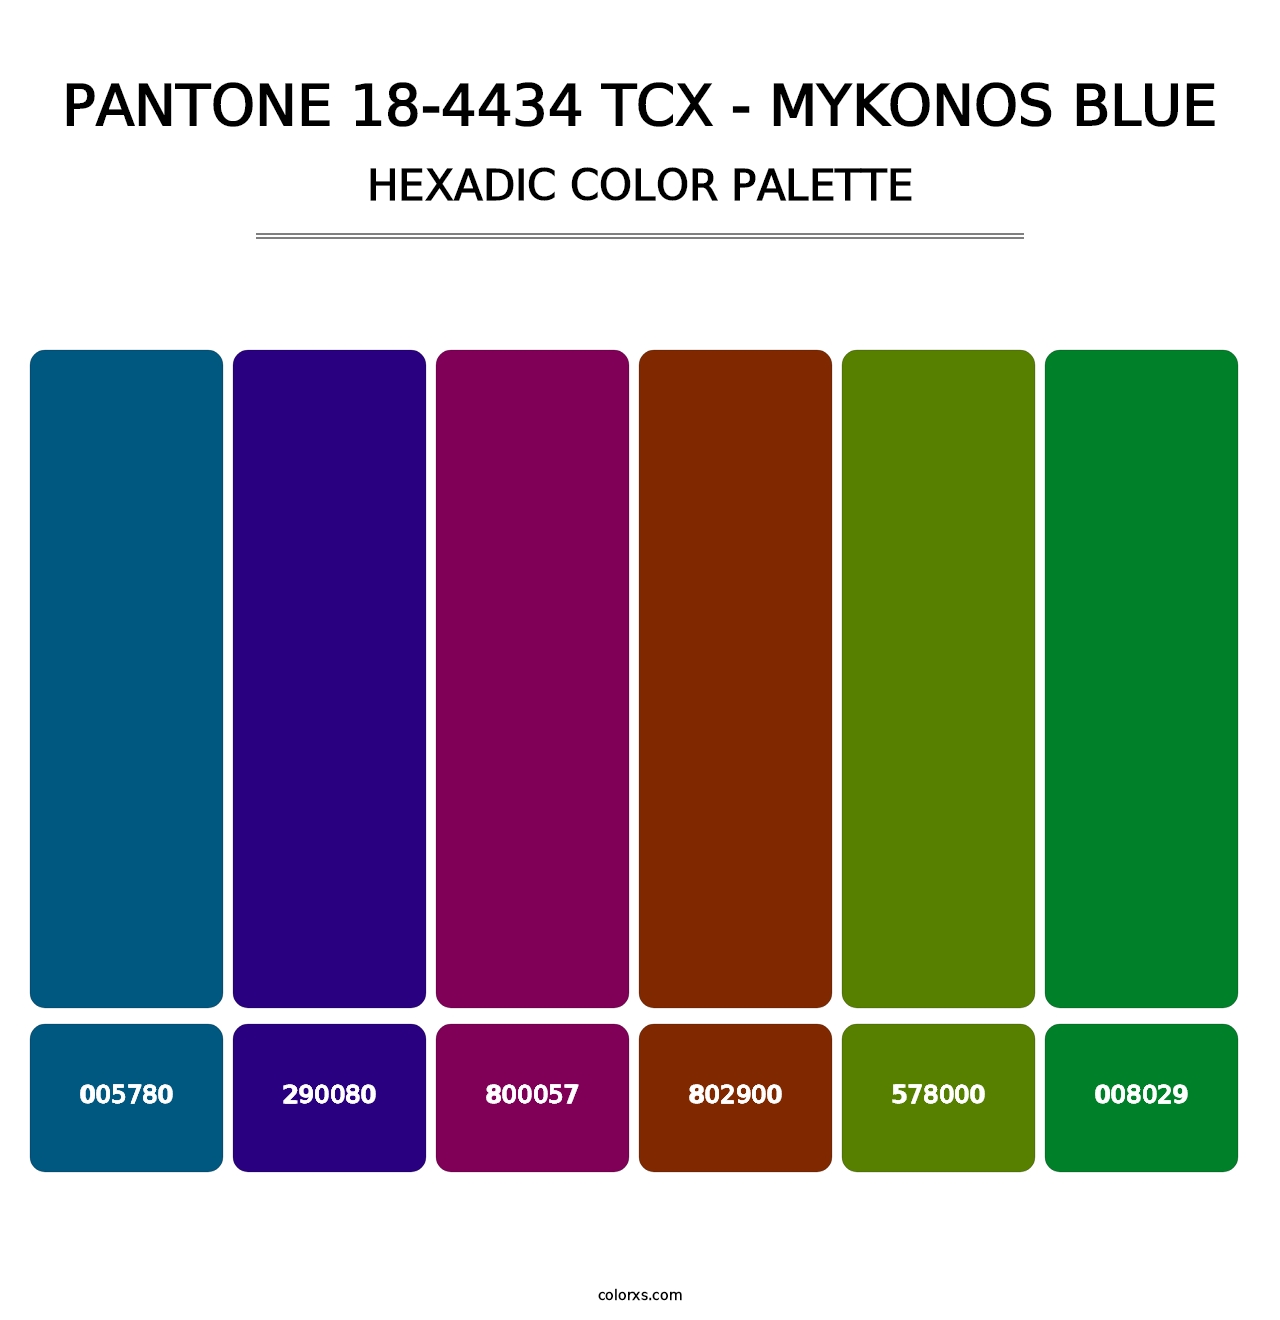 PANTONE 18-4434 TCX - Mykonos Blue - Hexadic Color Palette